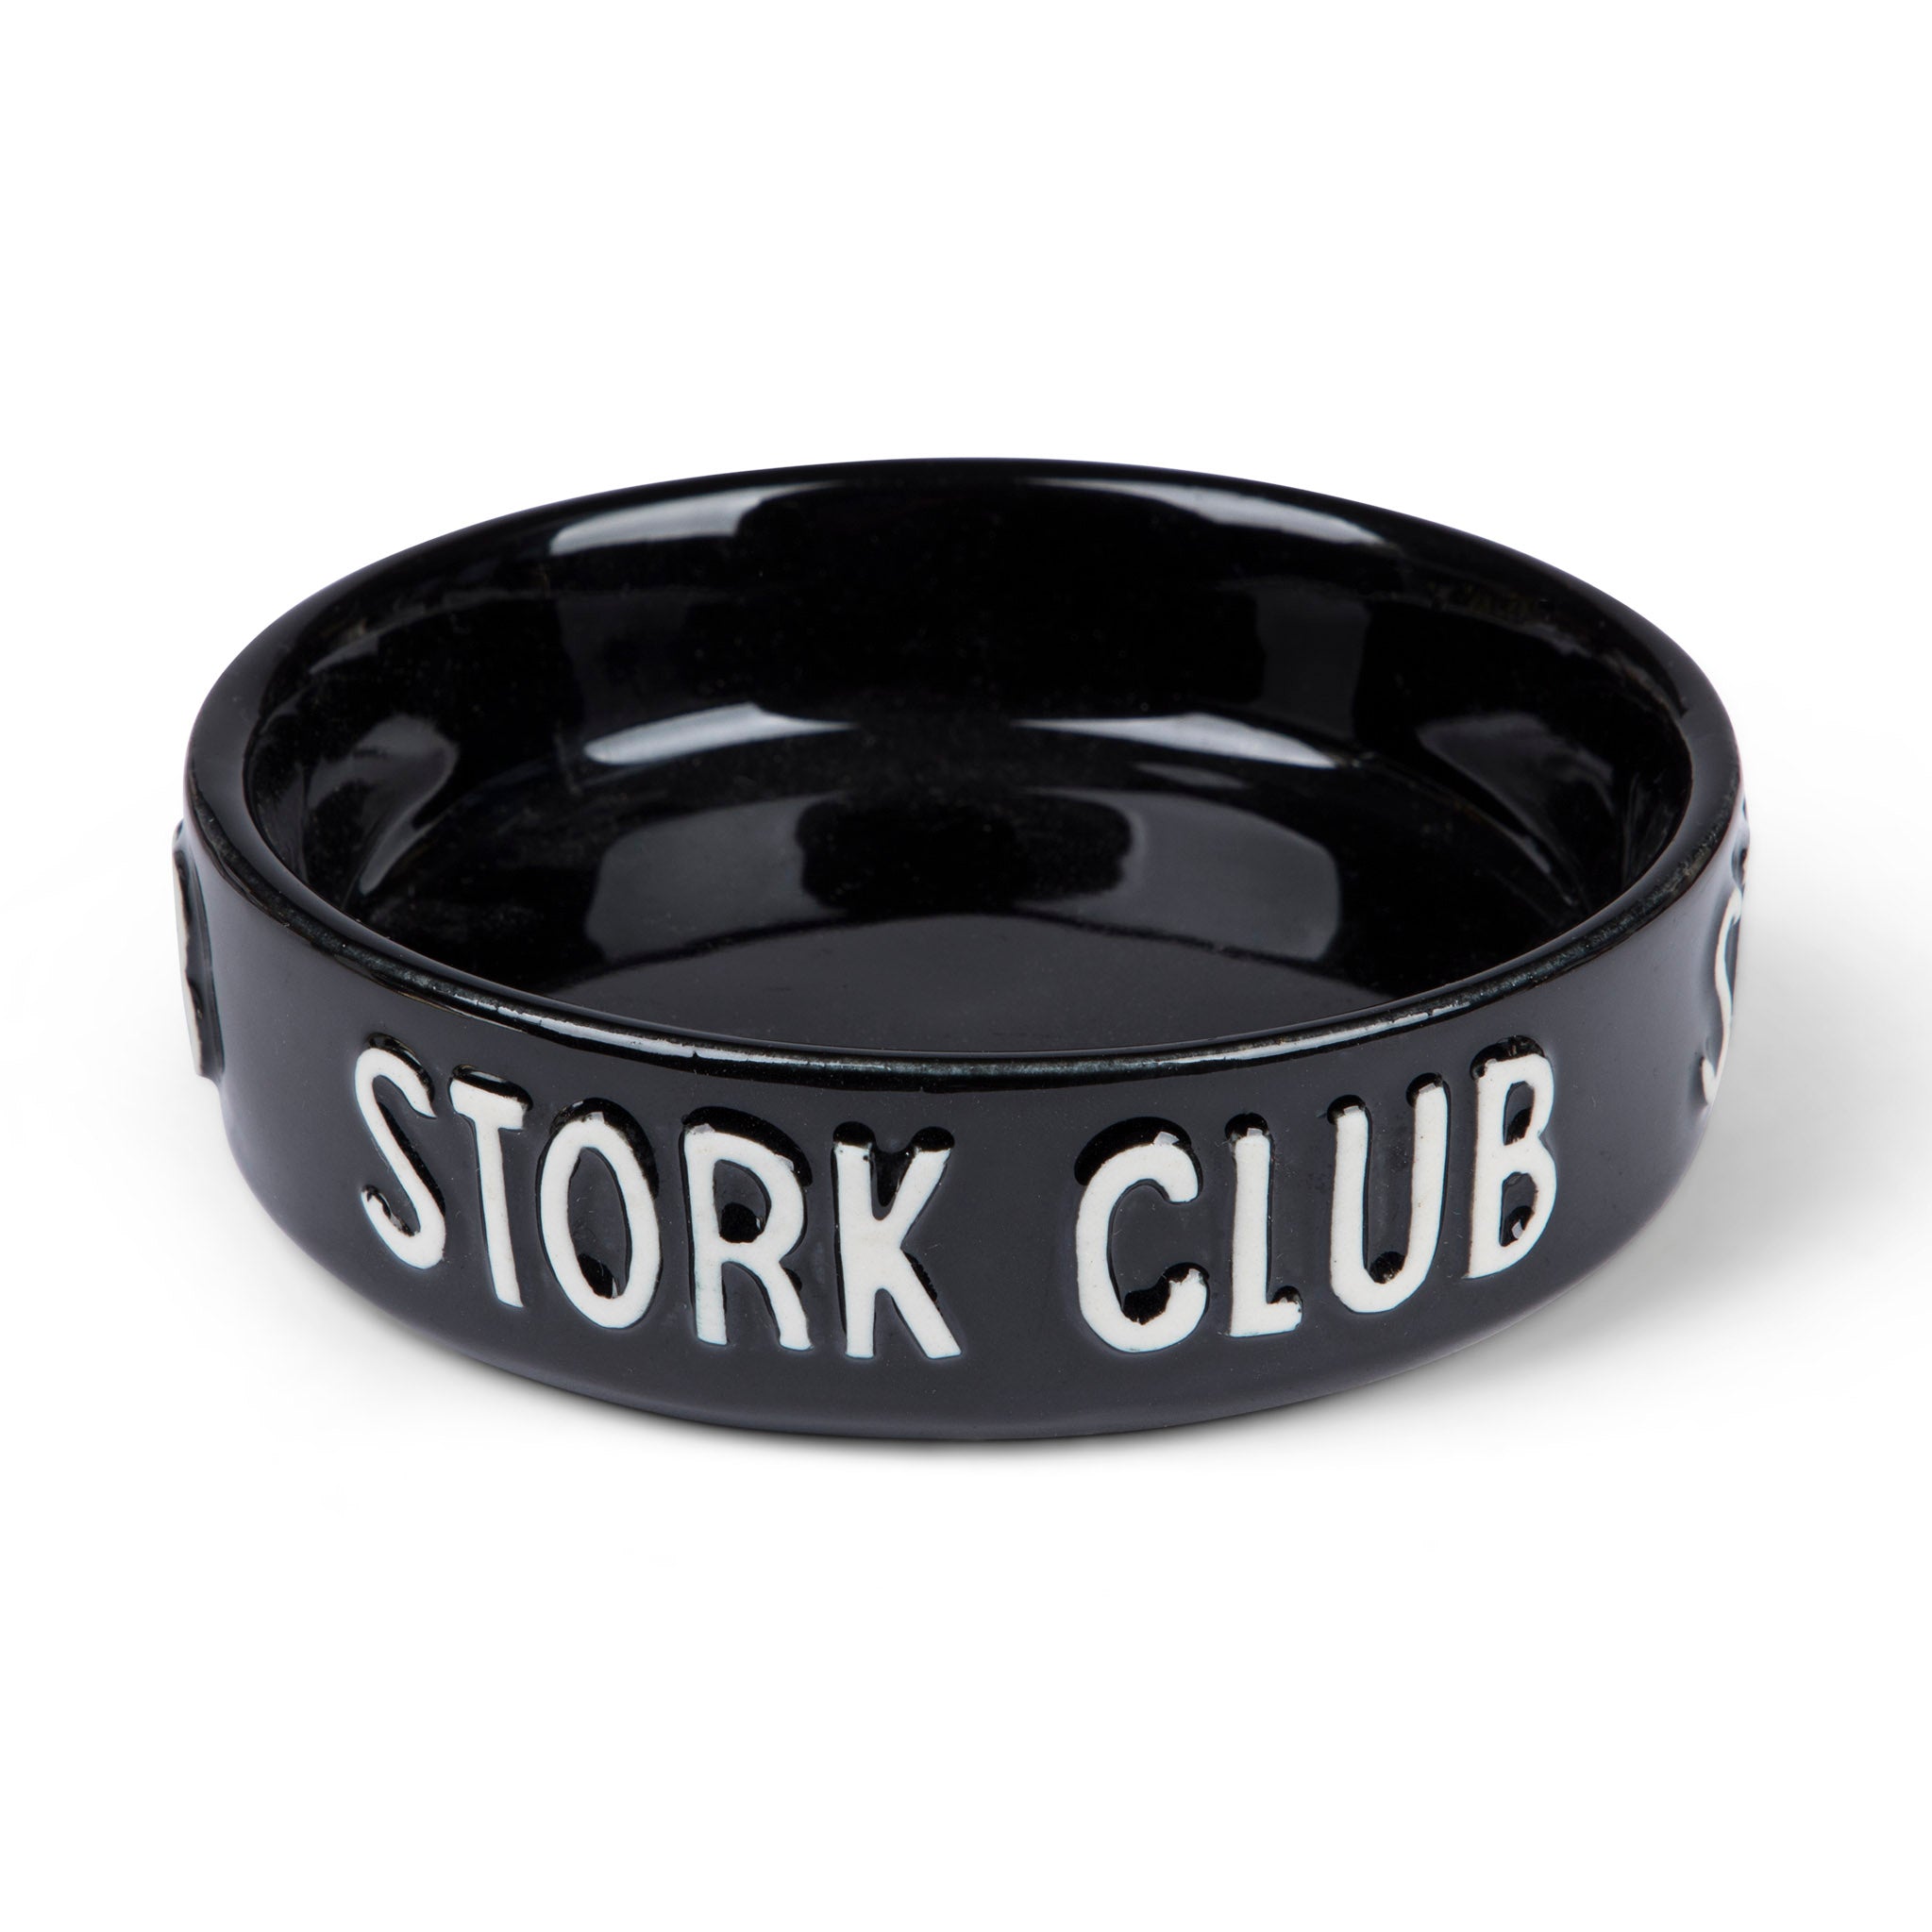 Stork Club Black Ceramic Small Ashtray Dish